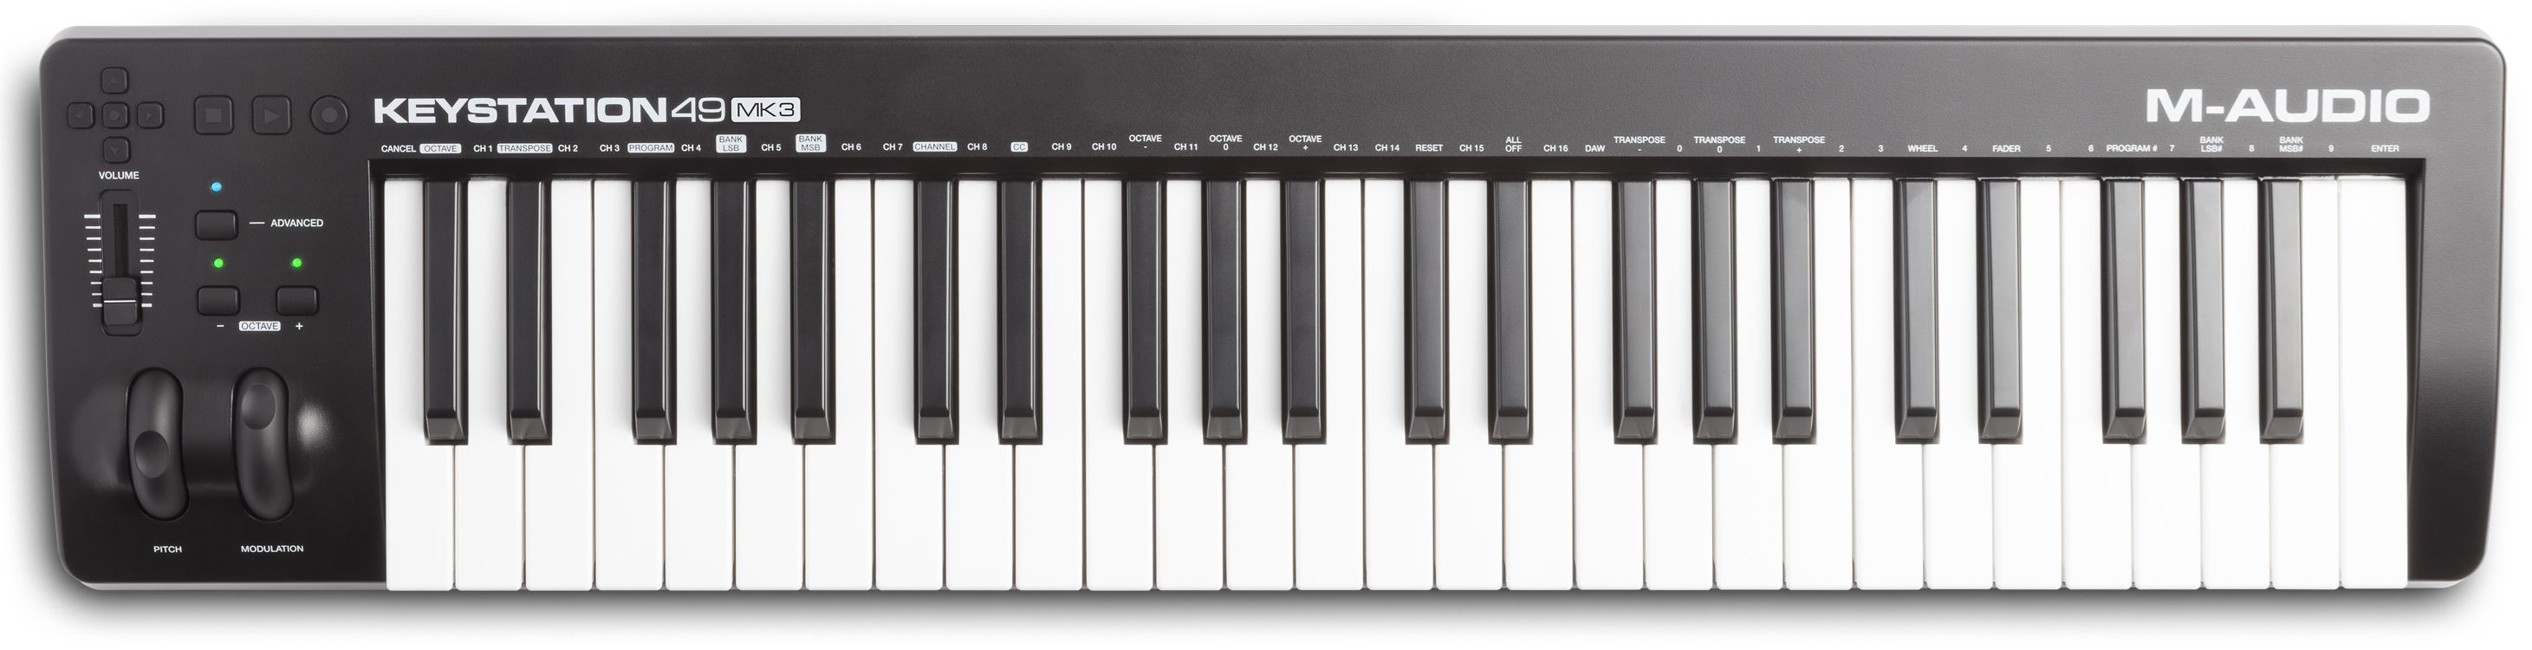 M-Audio - Keystation 49 MK3 - USB MIDI Keyboard